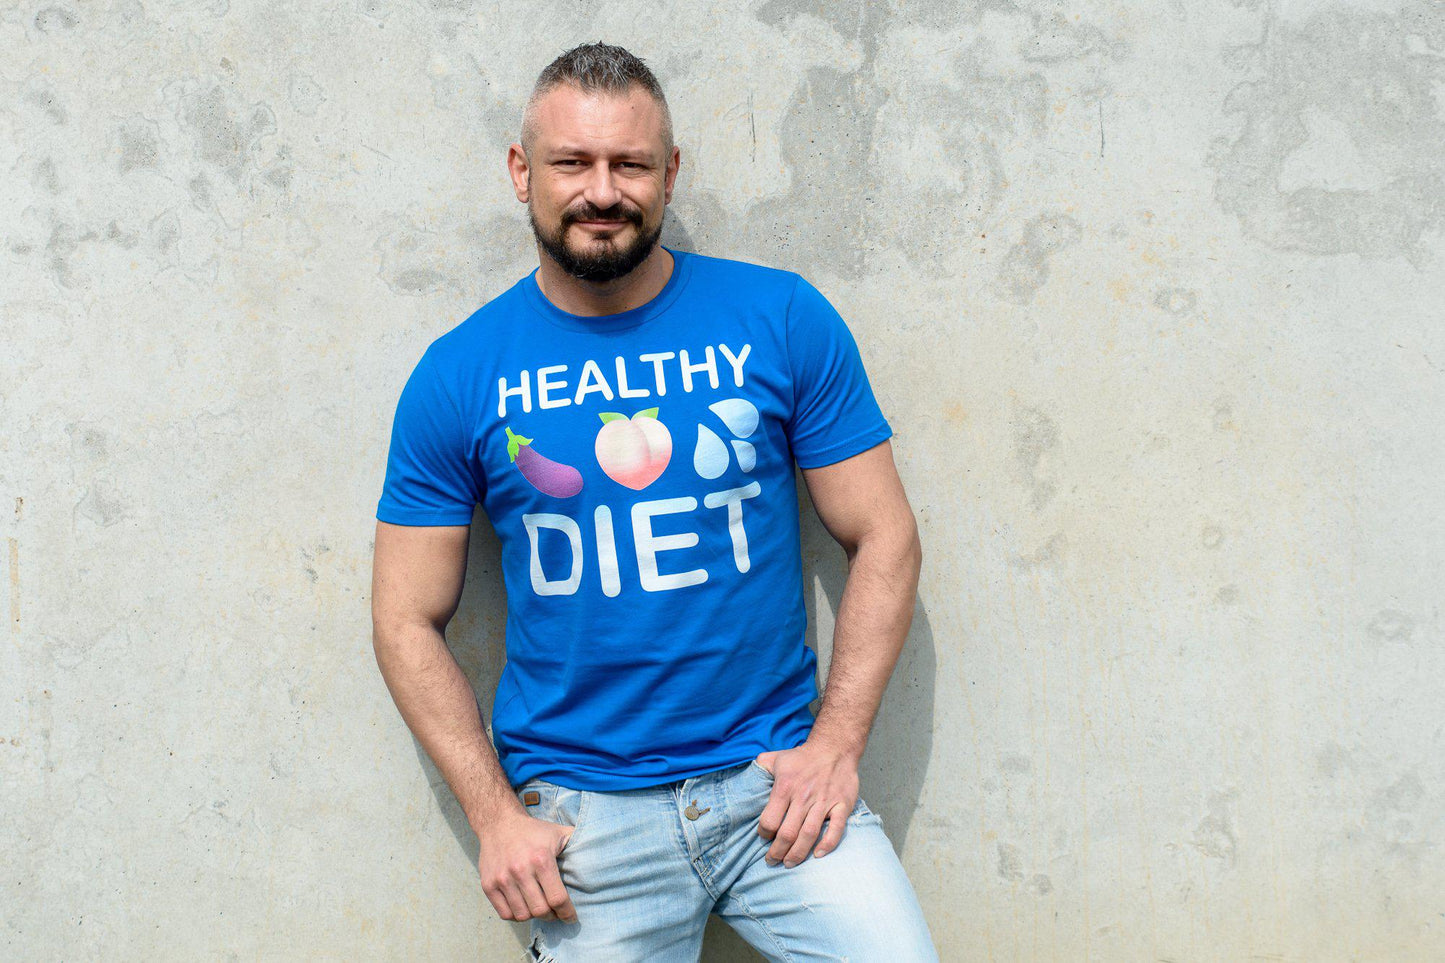 Healthy Diet Organic Cotton T-shirt